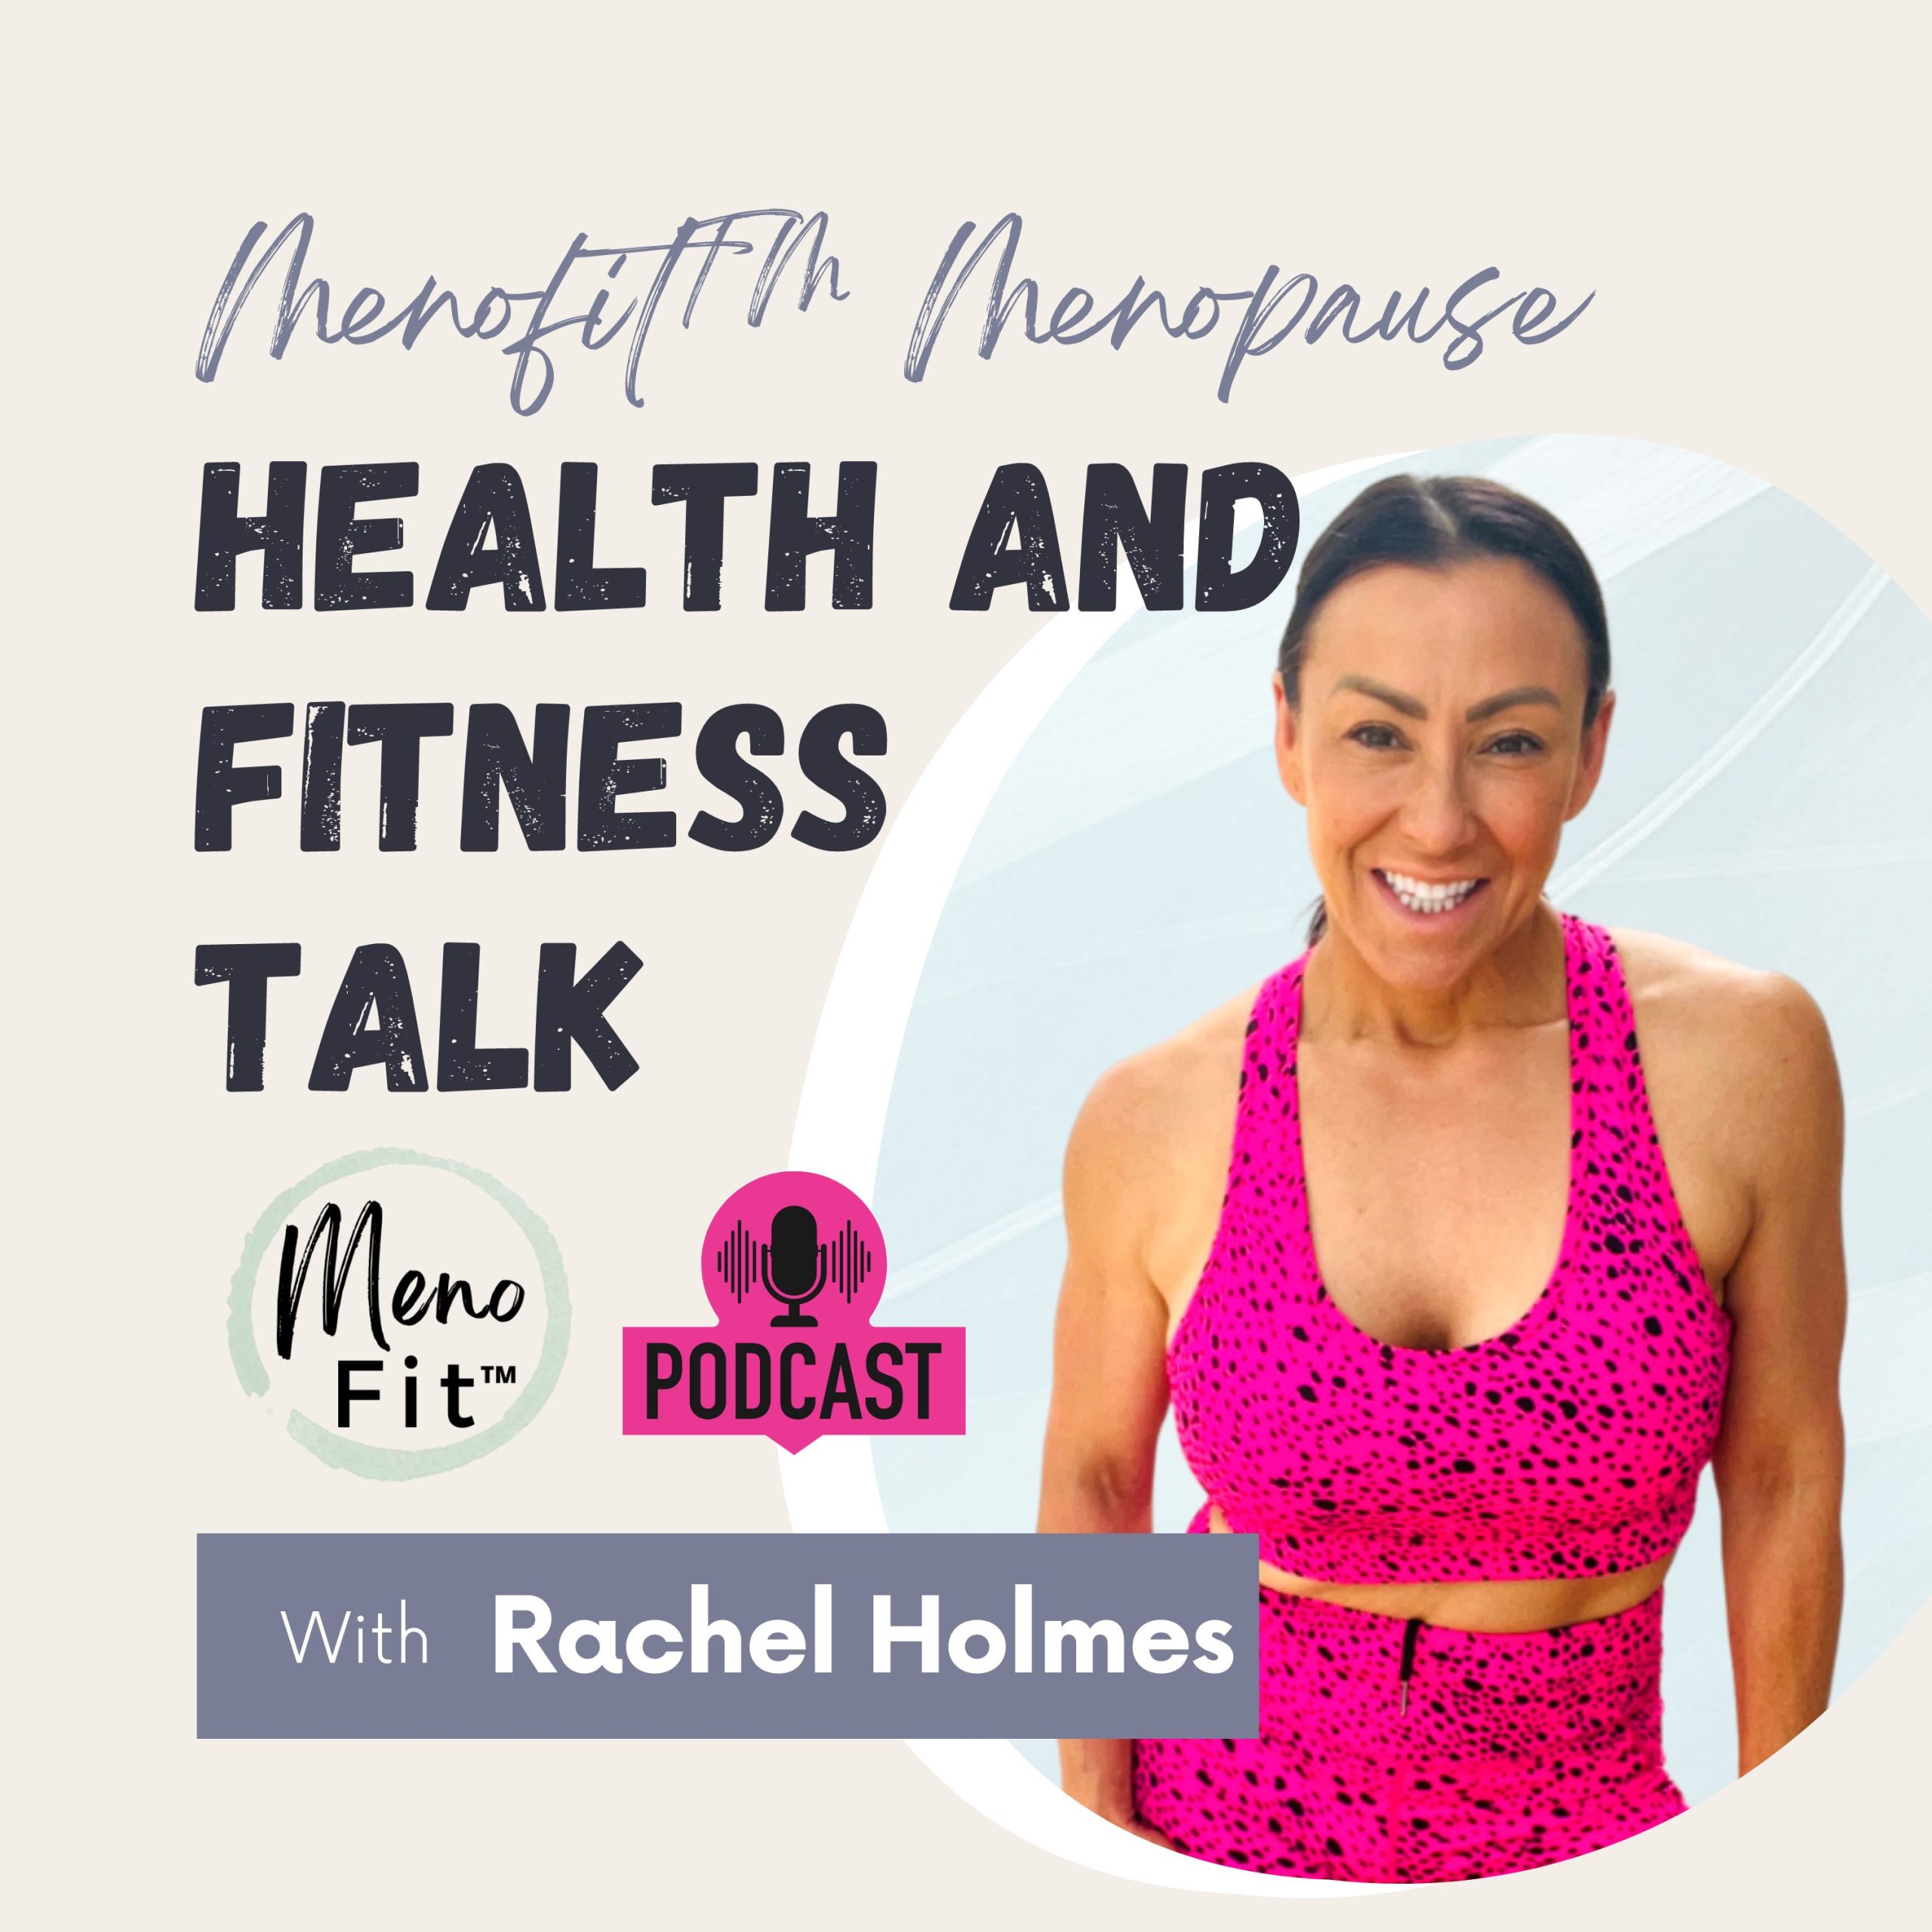 Menofit™ Menopause Health and Fitness Talk Podcast